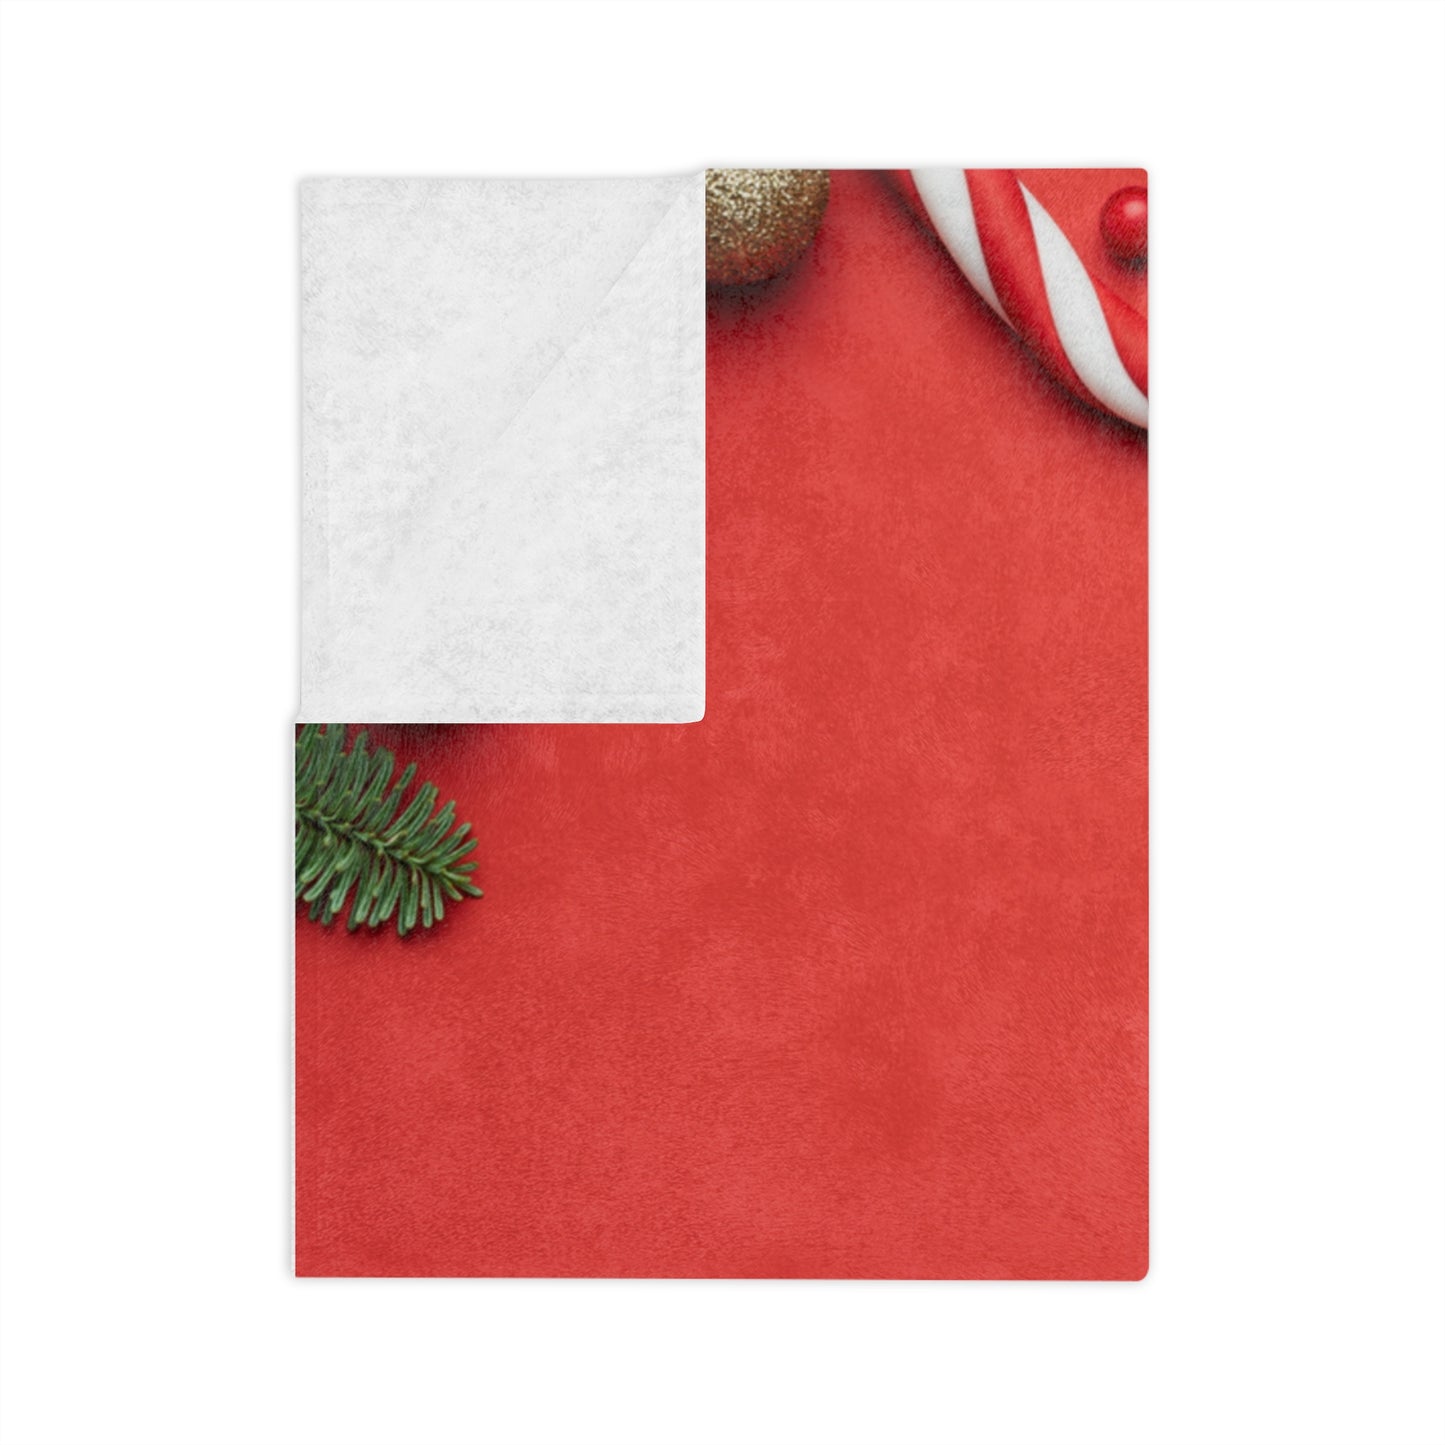 Merry Christmas, Spread Love and Joy Printed Velveteen Minky Blanket